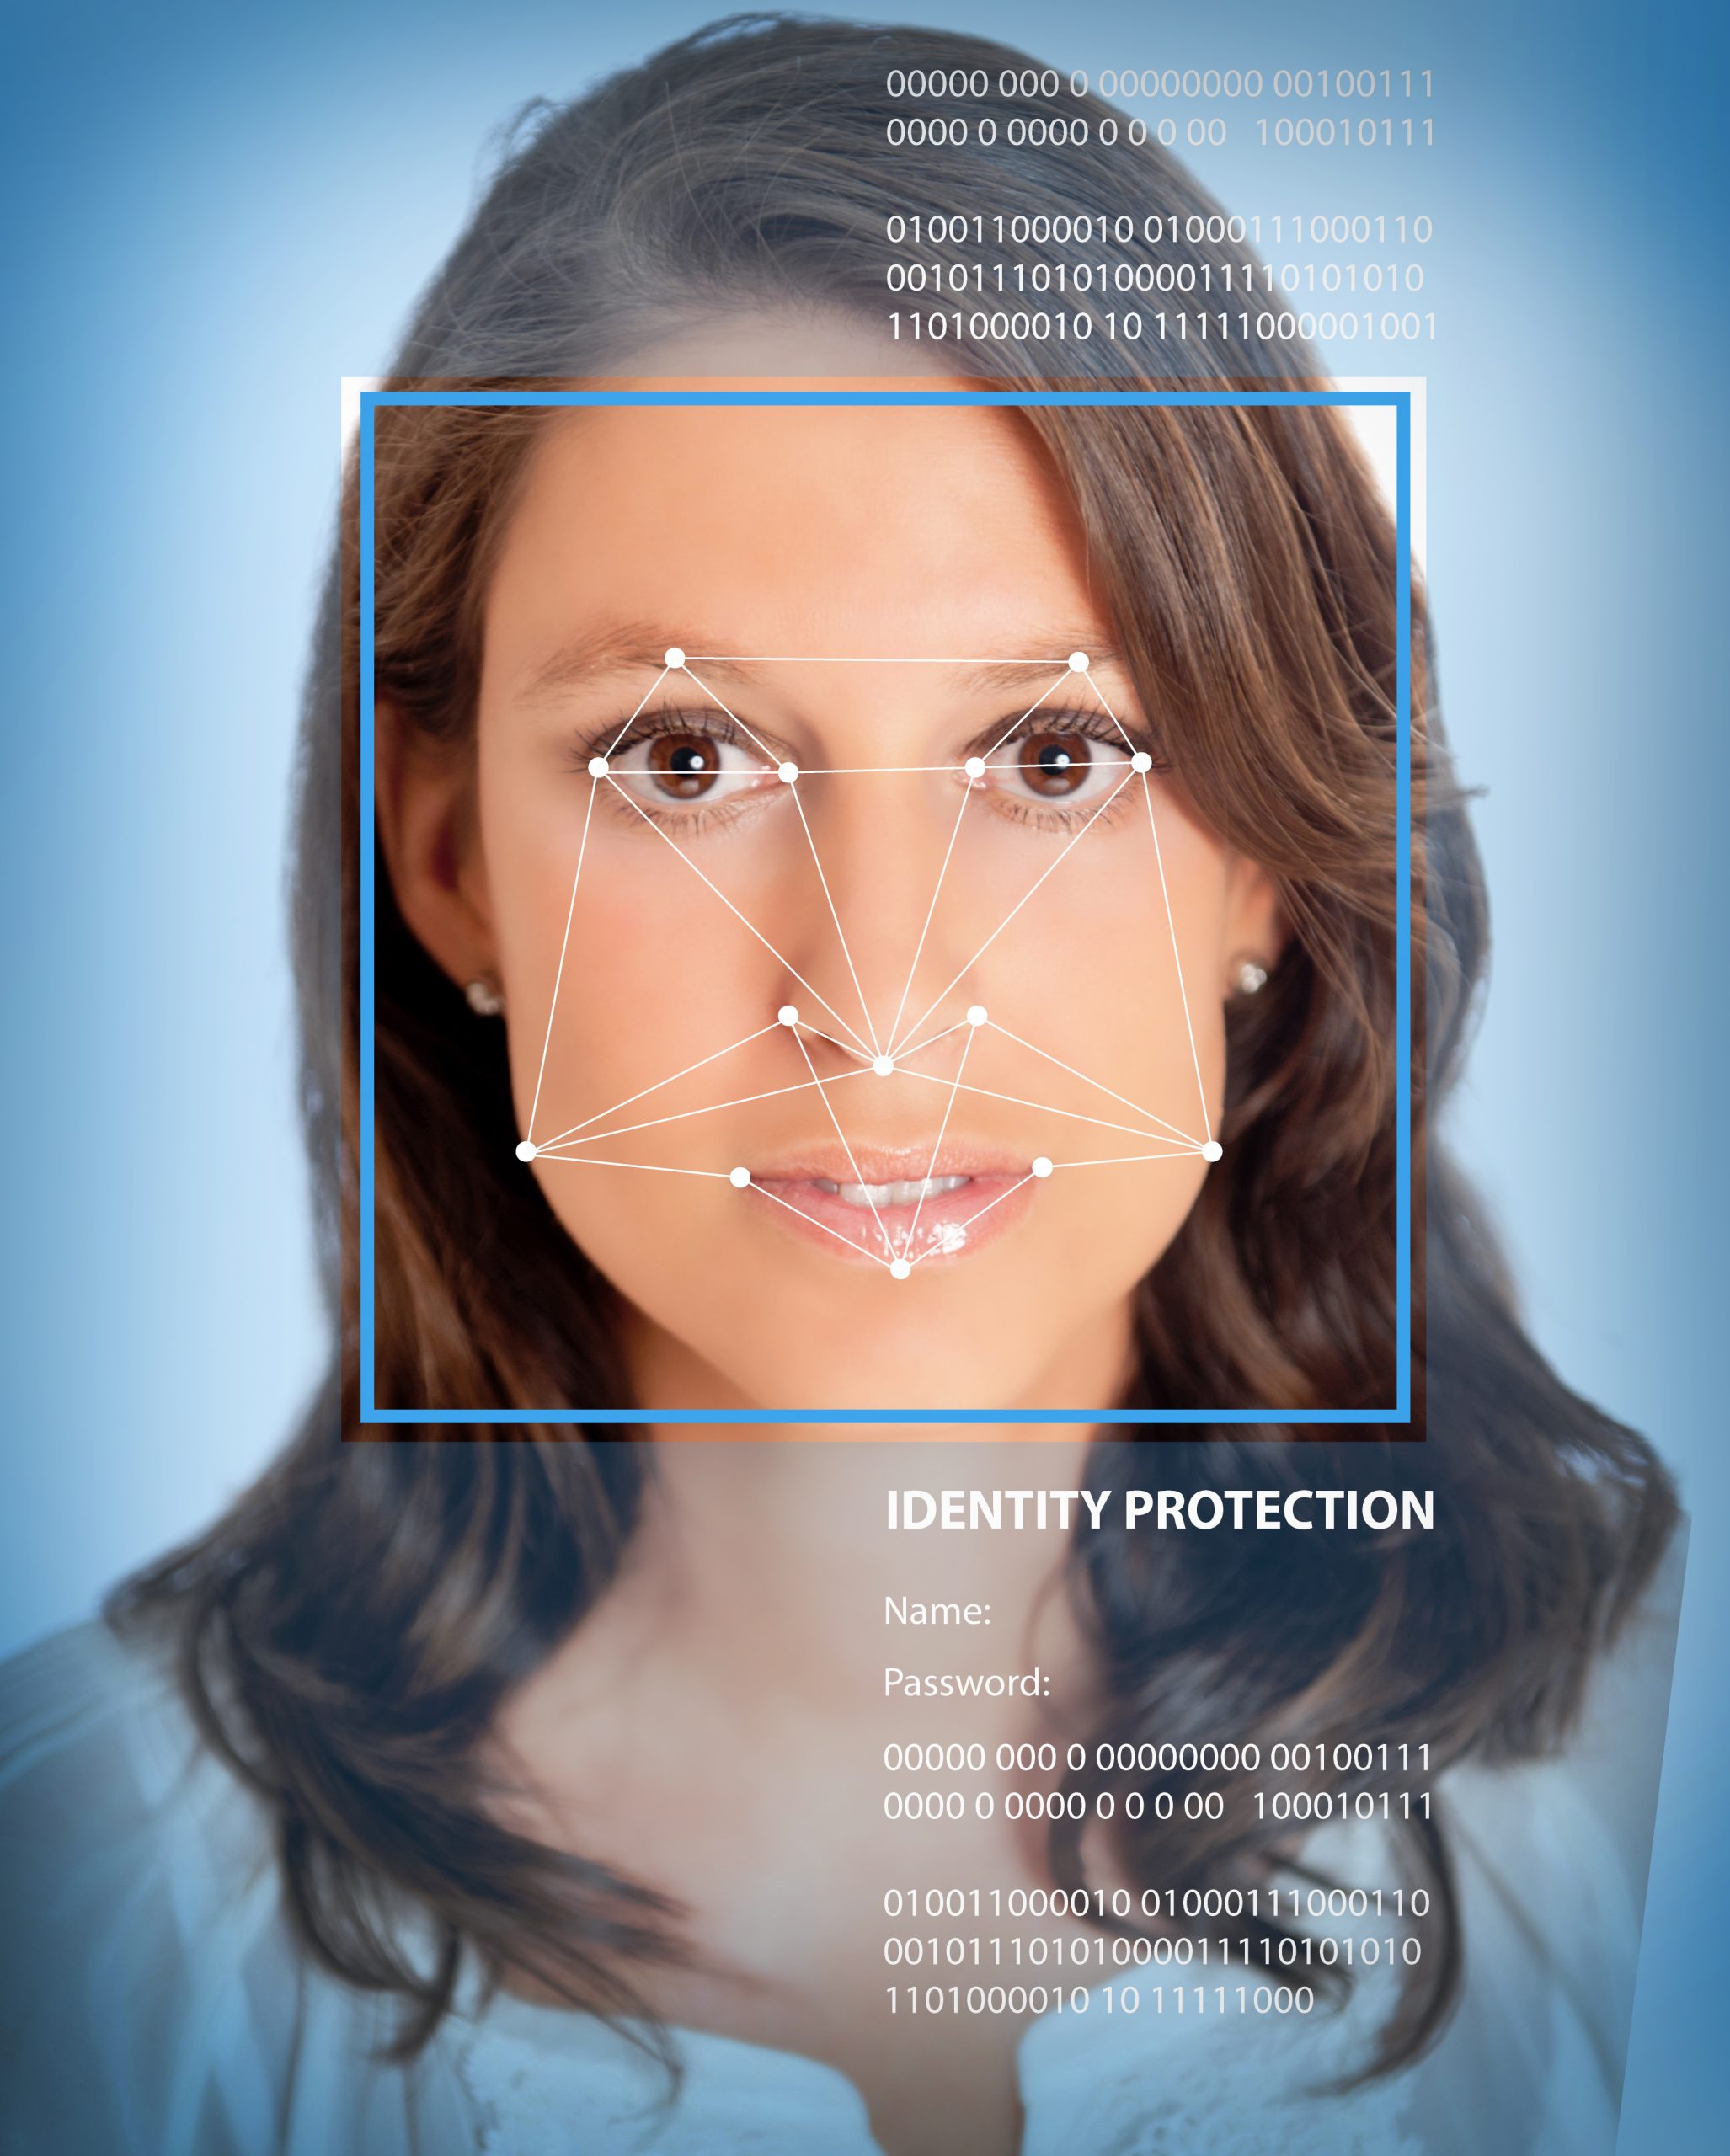 https://depositphotos.com/66269141/stock-photo-biometrics-female.html